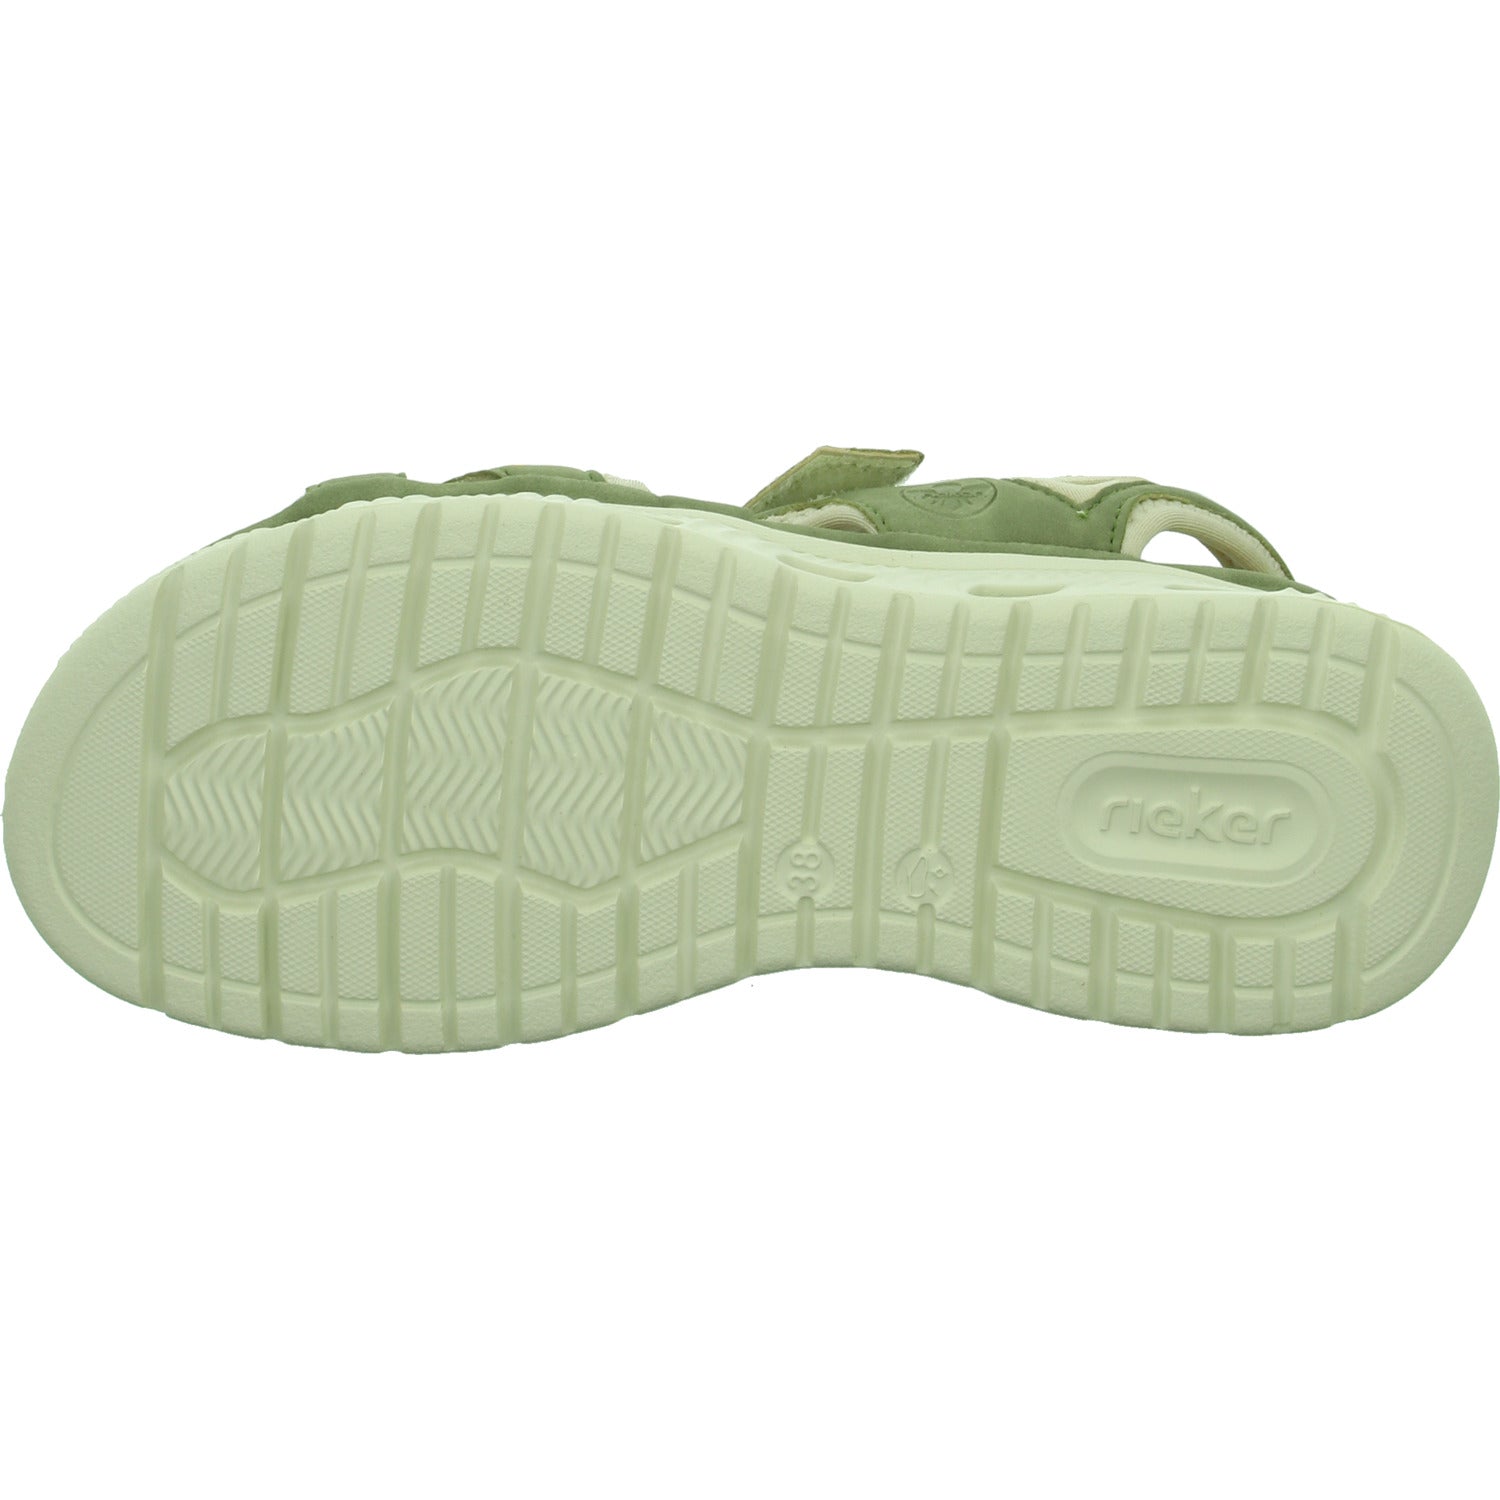 Rieker Sportliche Sandalette bis 30mm Sohlenhöhe